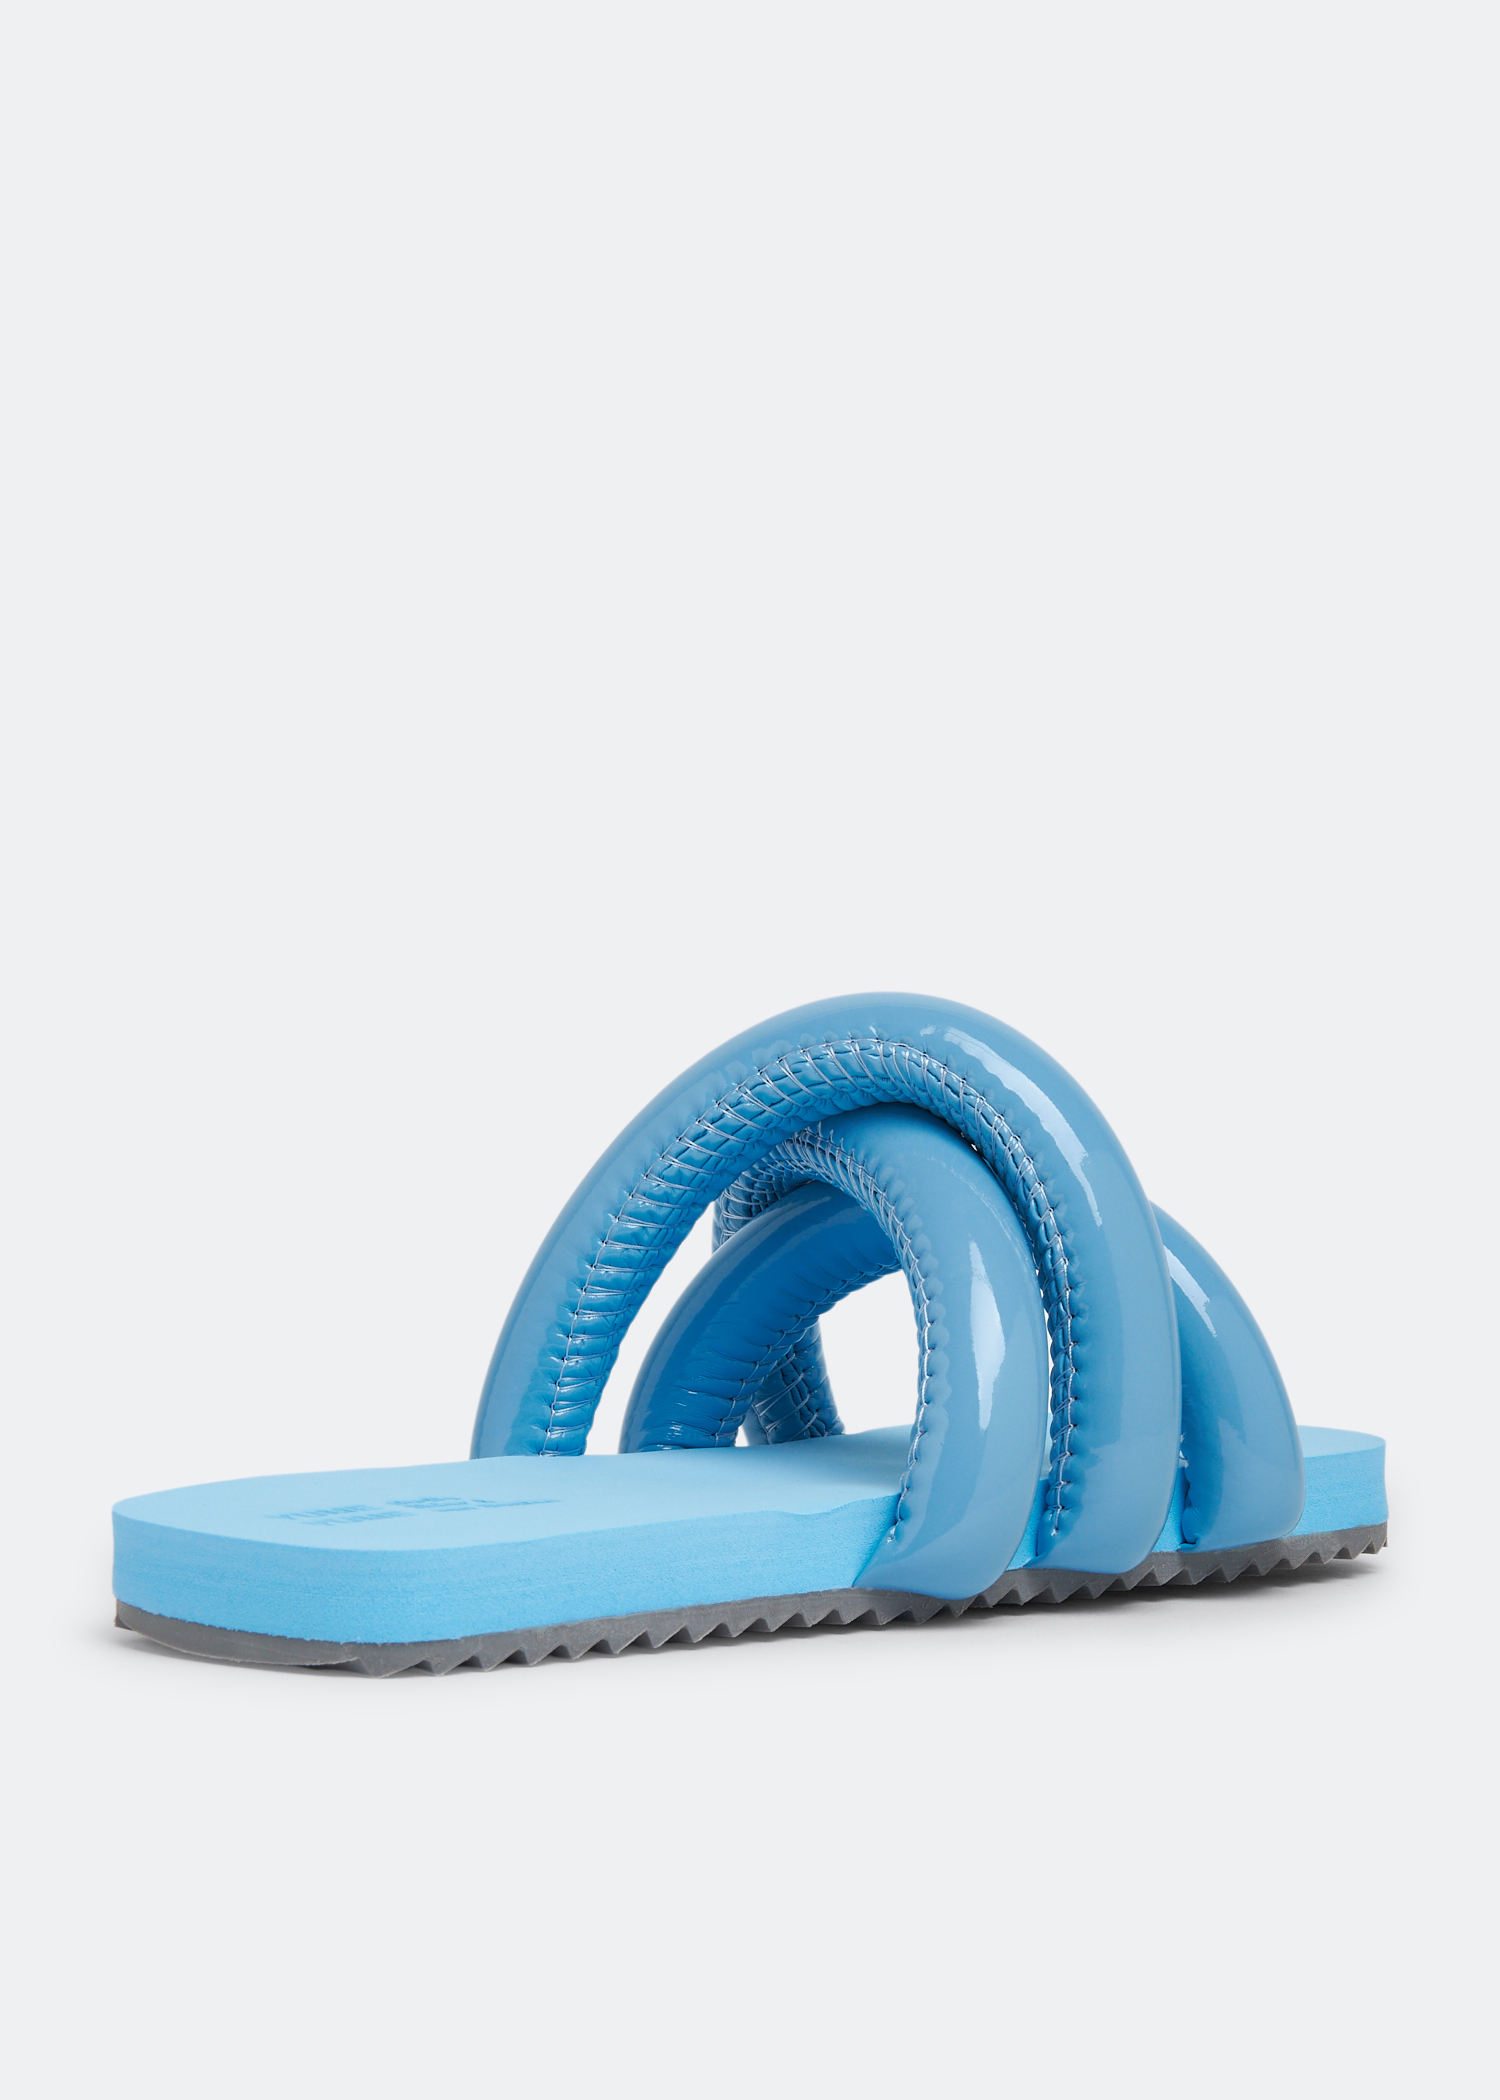 Yume Yume Tyre slides for Women - Blue in KSA | Level Shoes